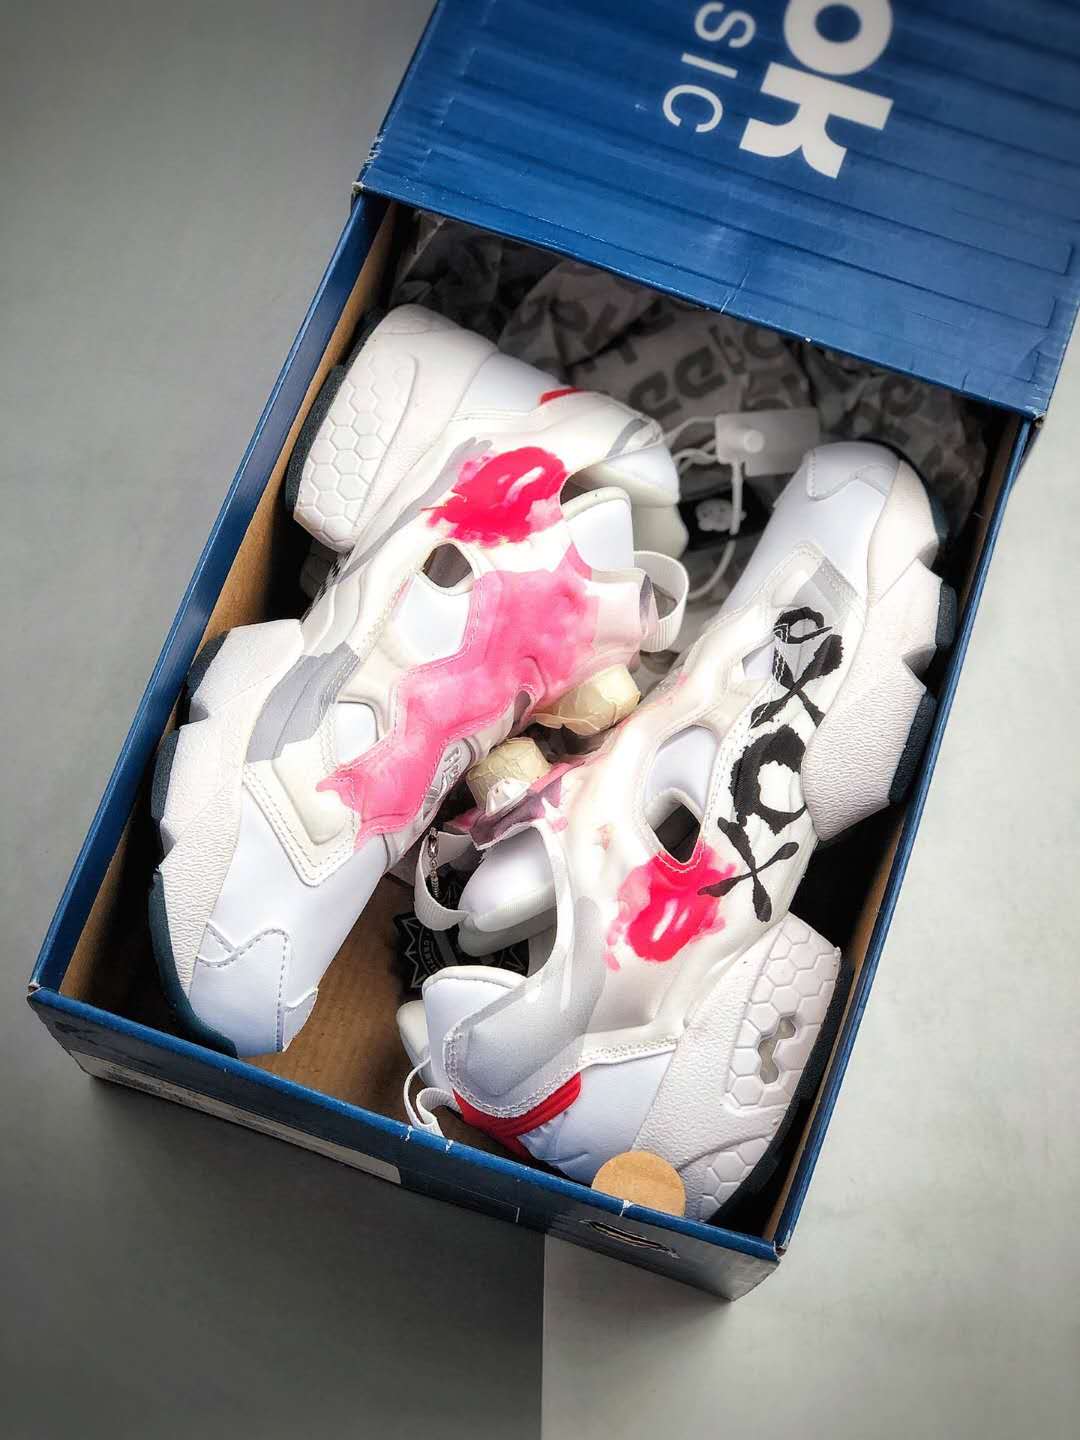 Reebok InstaPump Fury Celebrate XOXO V69142 - Get the Hottest Sneaker Now!